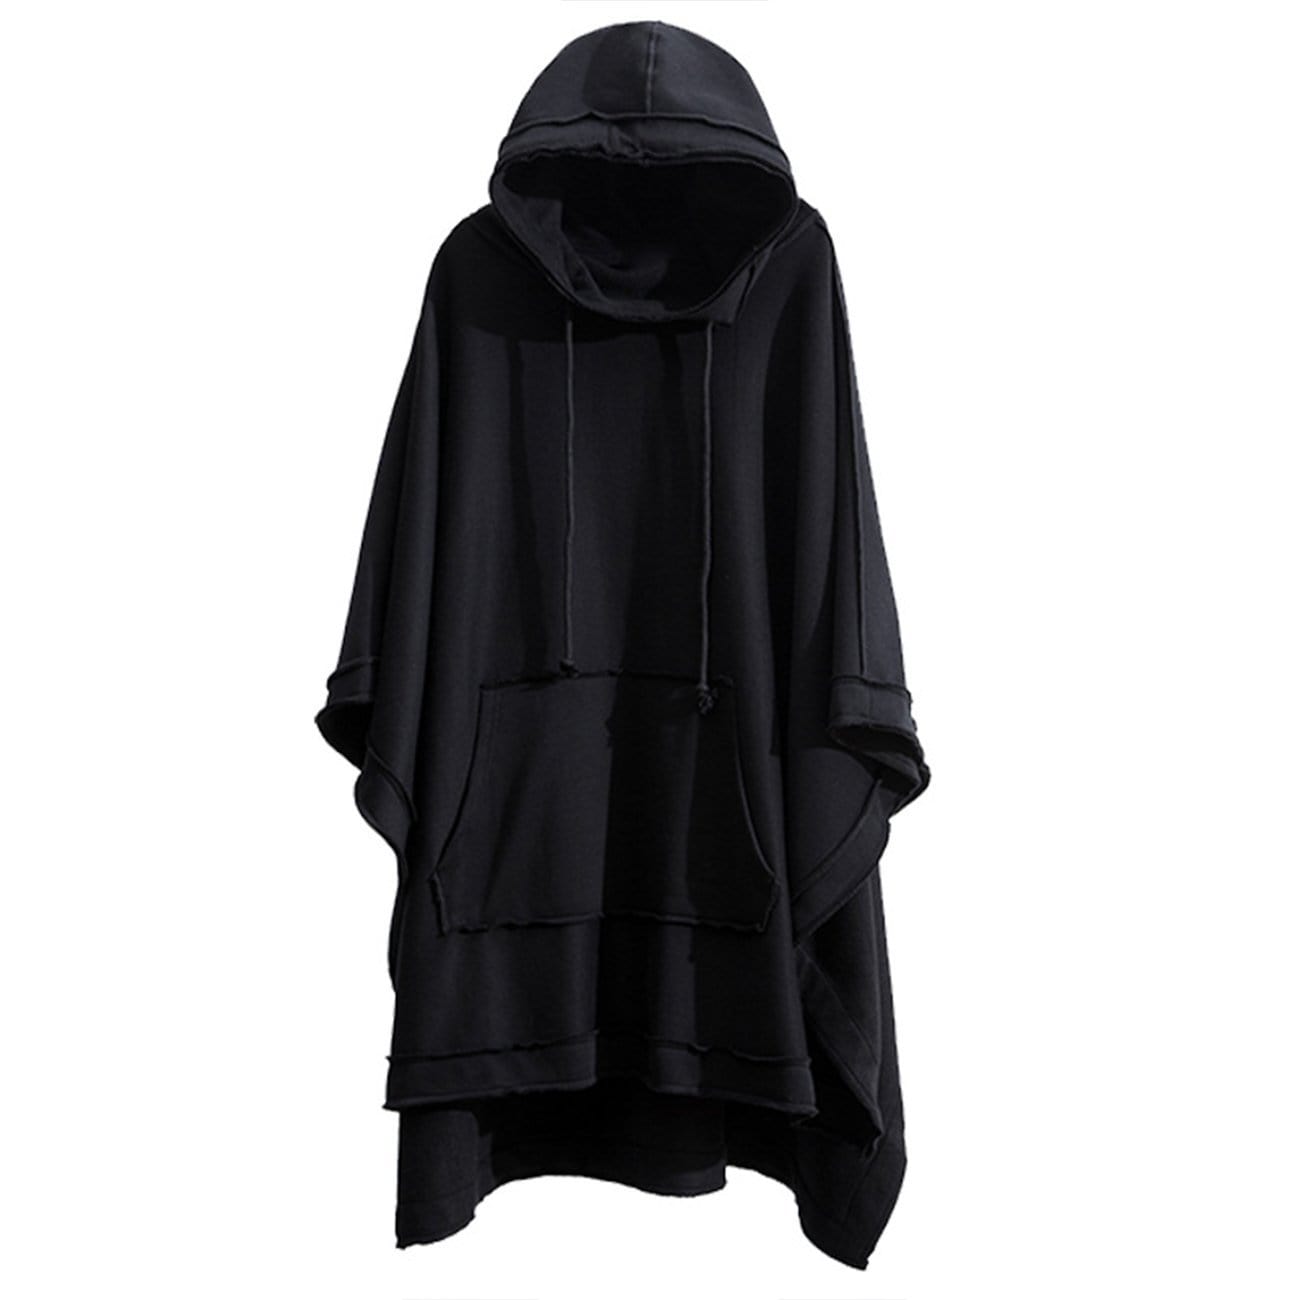 WLS Dark Bat Cloak Cape Wizard Hooded Coat